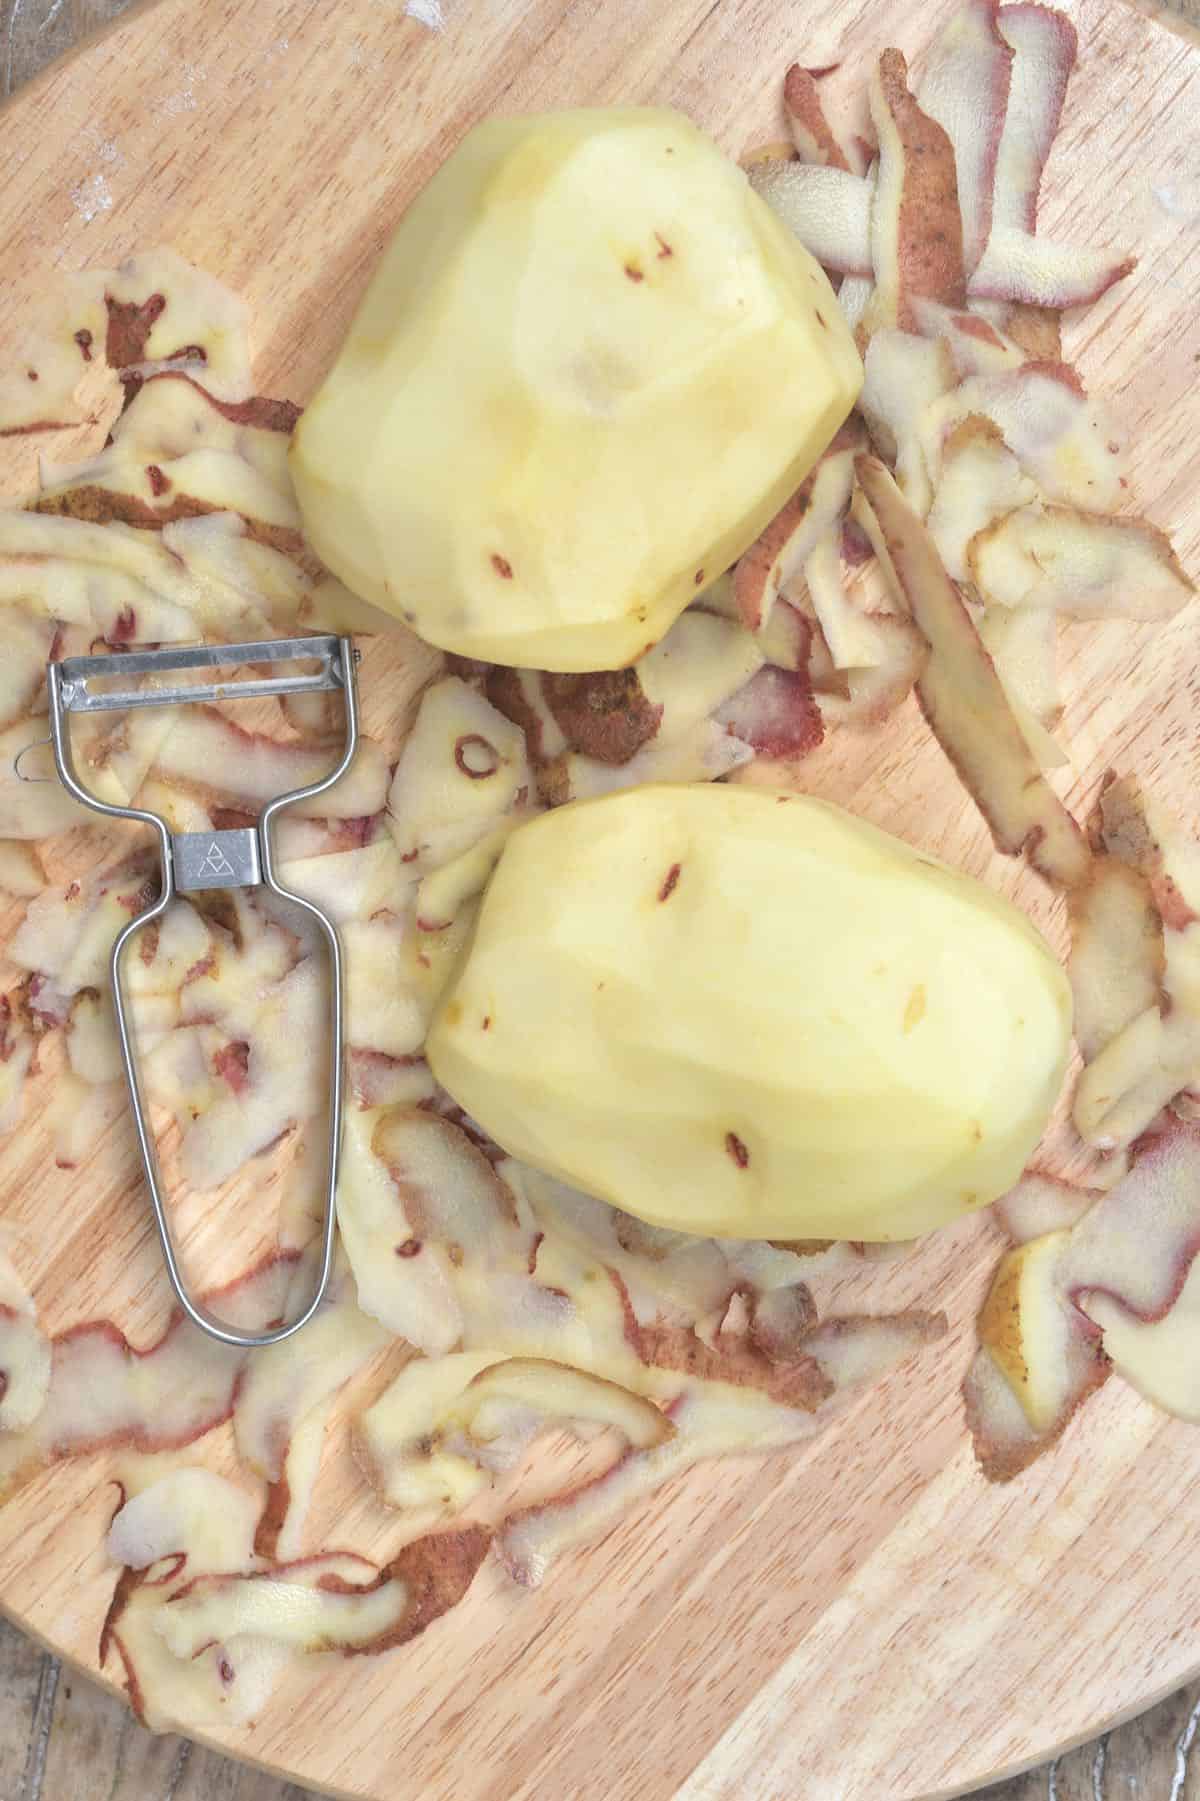 Two peeled potatoes